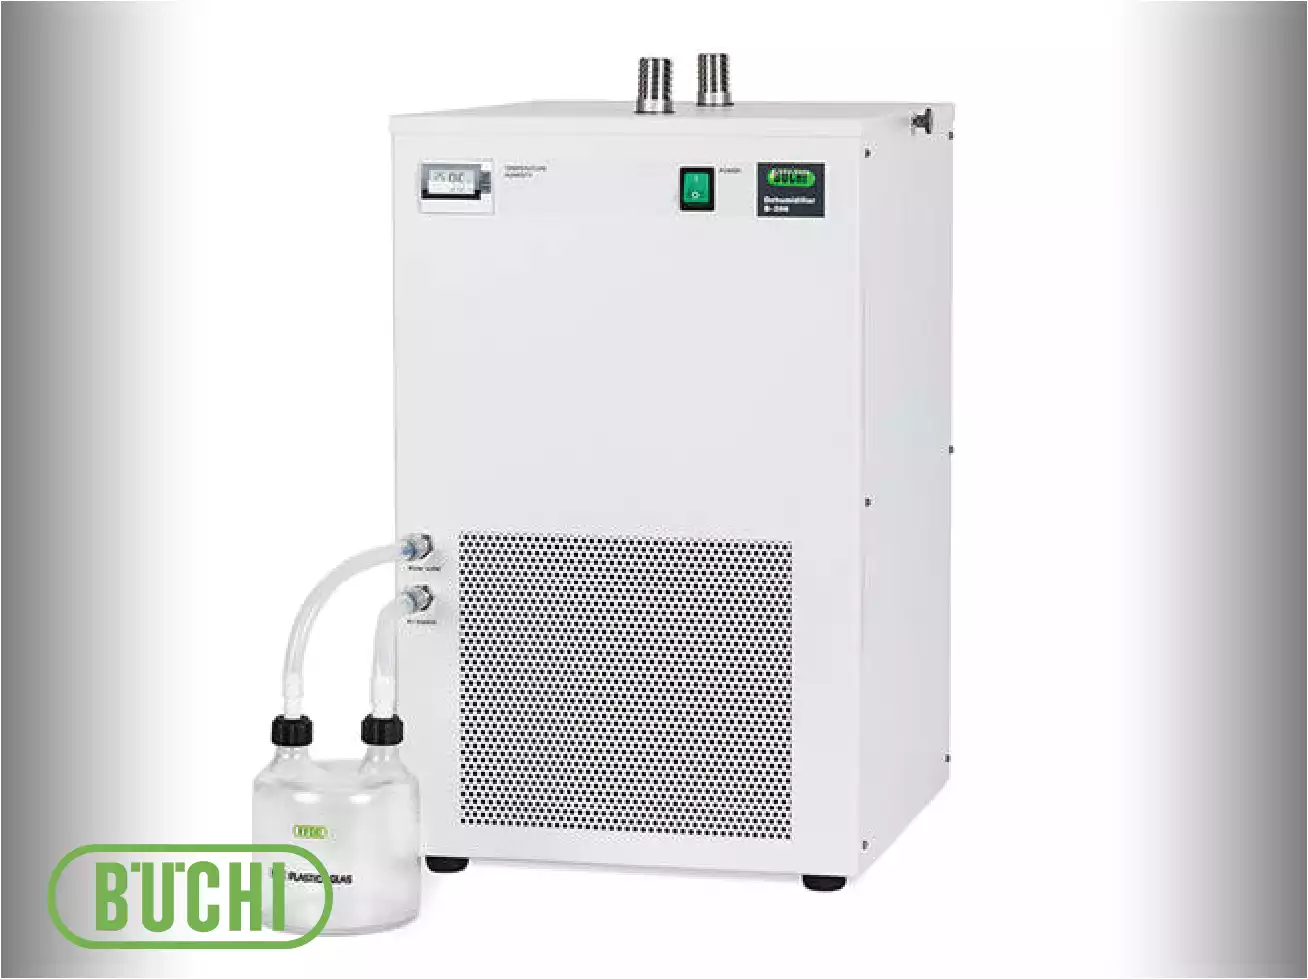 Buchi Spray Drying & Encapsulation Solutions